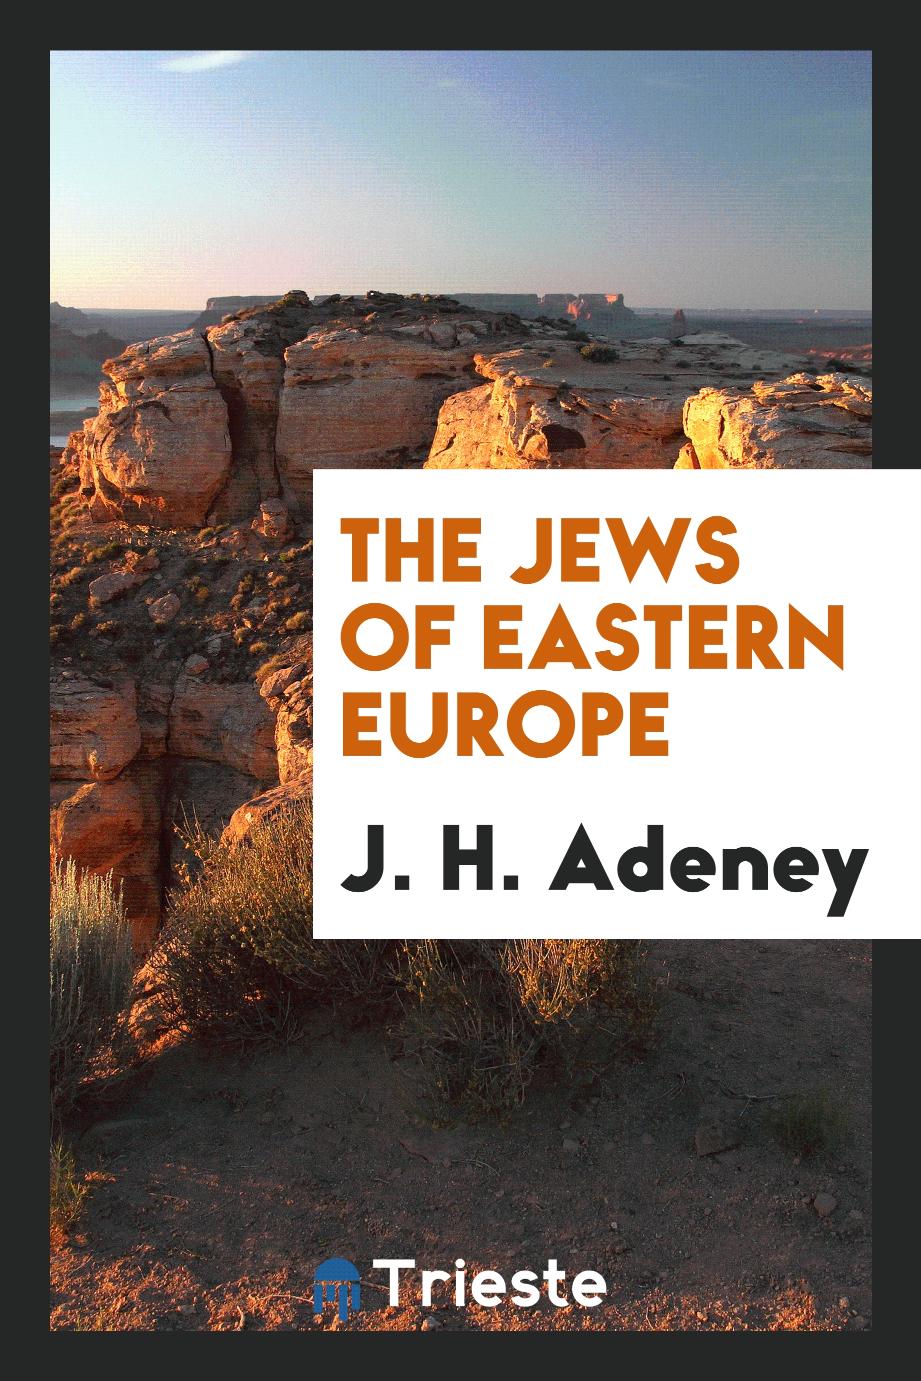 The Jews of eastern Europe